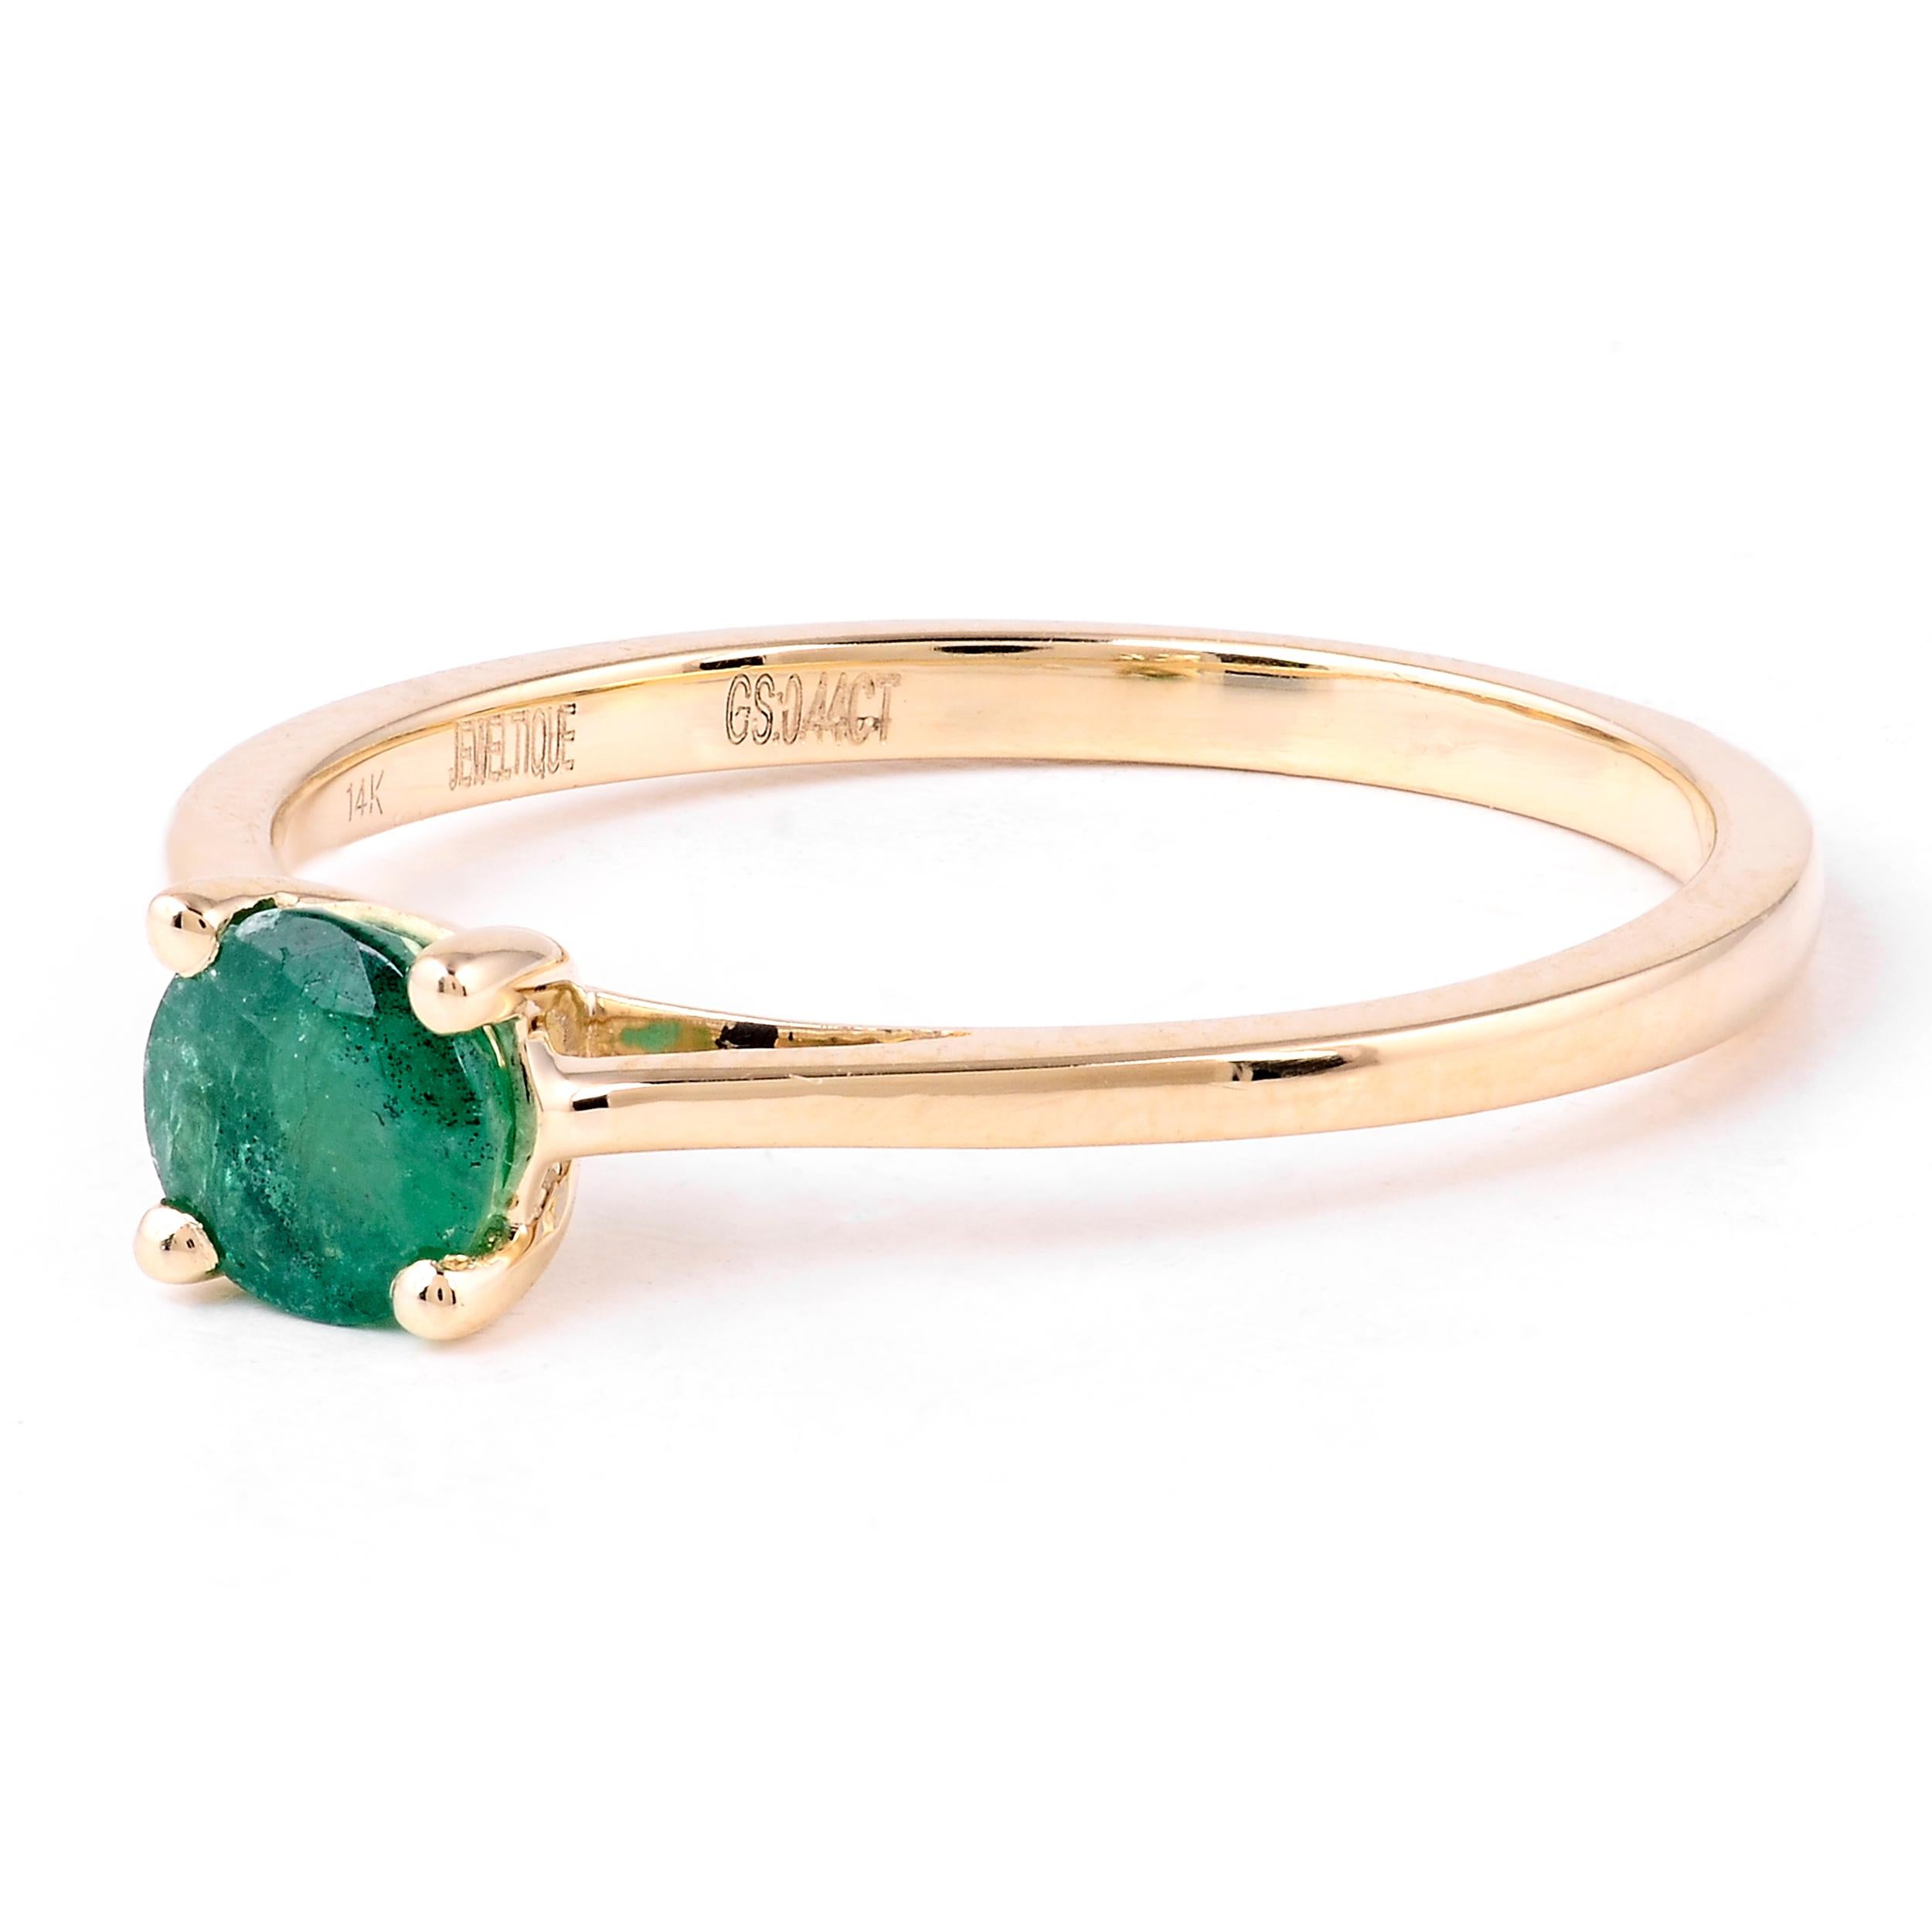 Women's Luxurious 14K Emerald Cocktail Ring, Size 7 - Elegant Statement Jewelry Piece